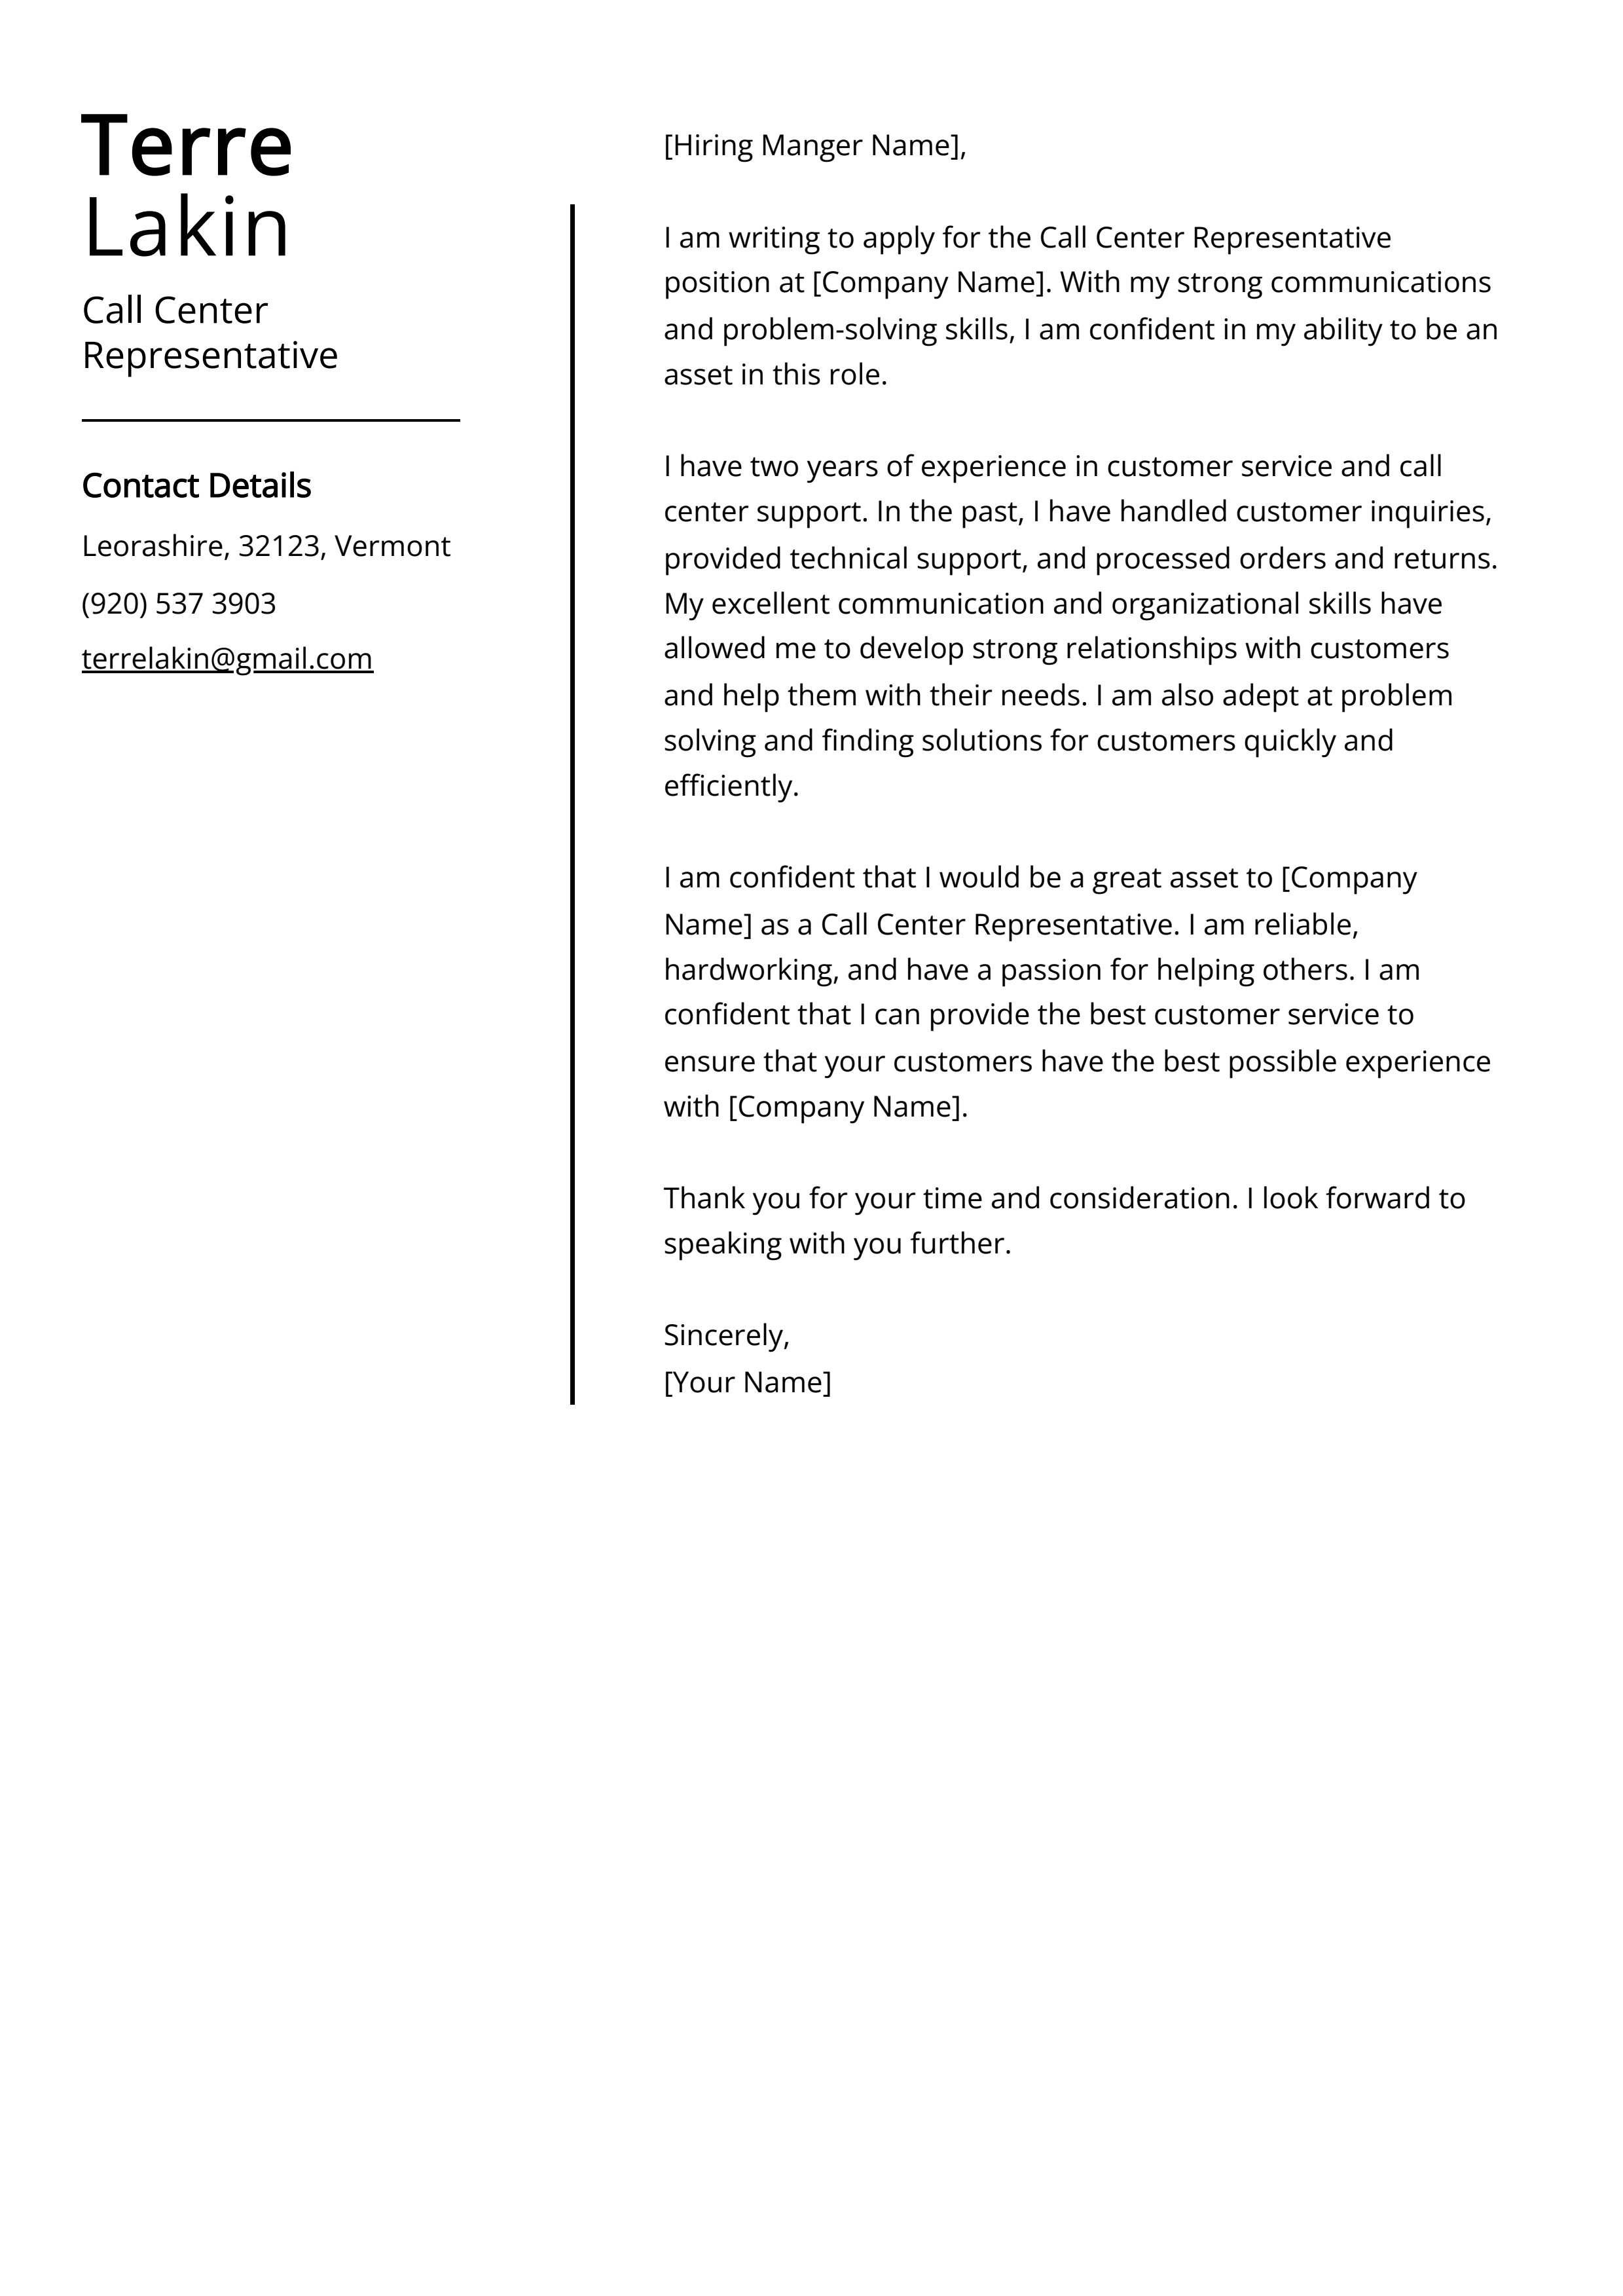 Call Center Representative Cover Letter Example